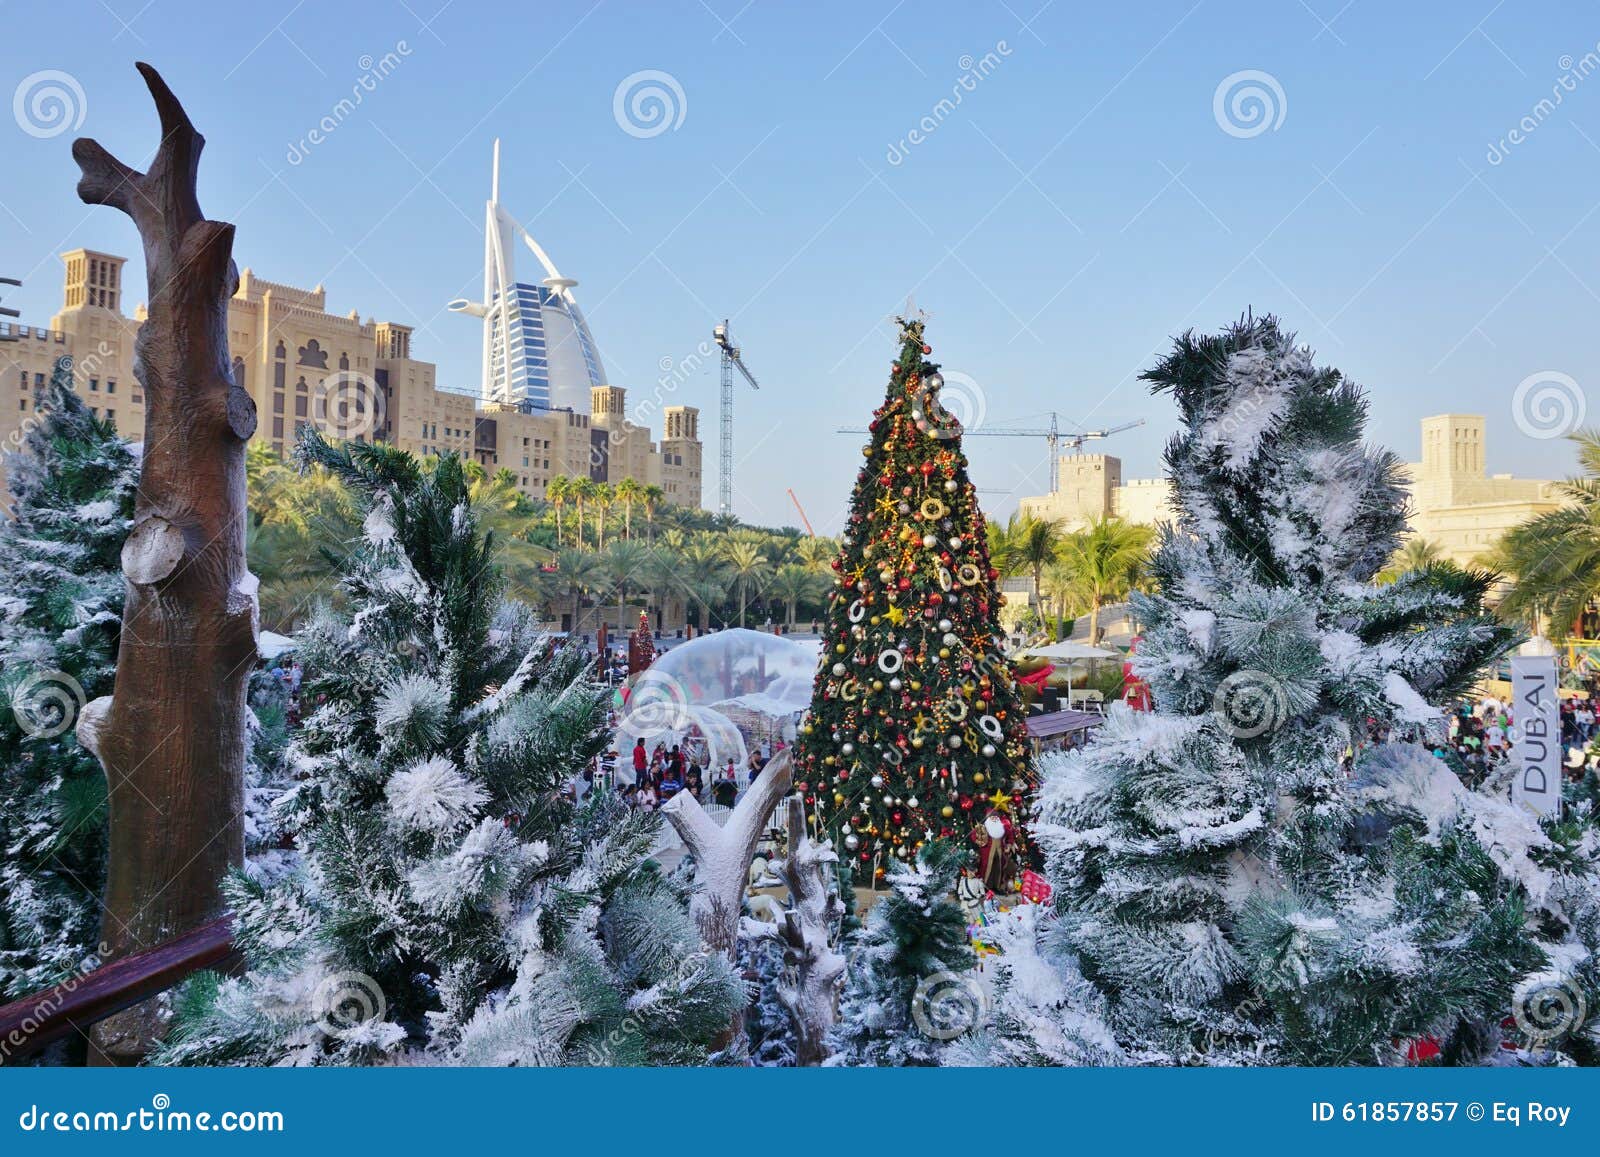  Christmas  Decorations  In Dubai  In The United Arab Emirates 